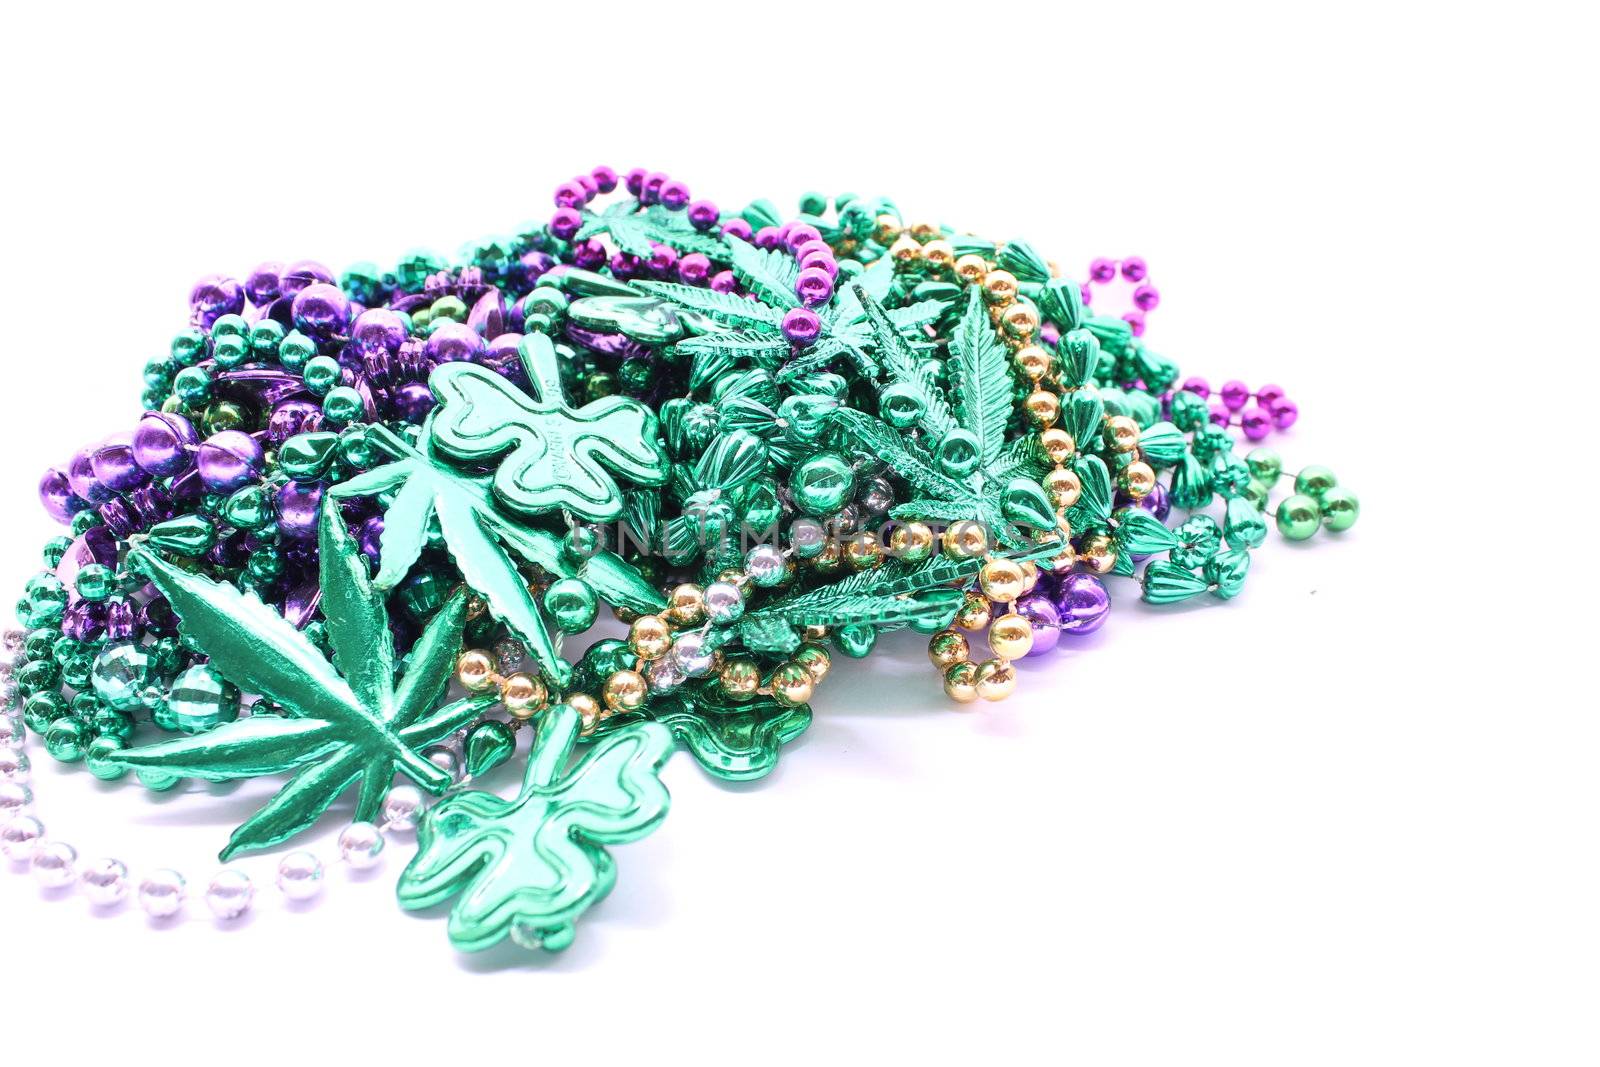 Mardi Gras Beads by abhbah05